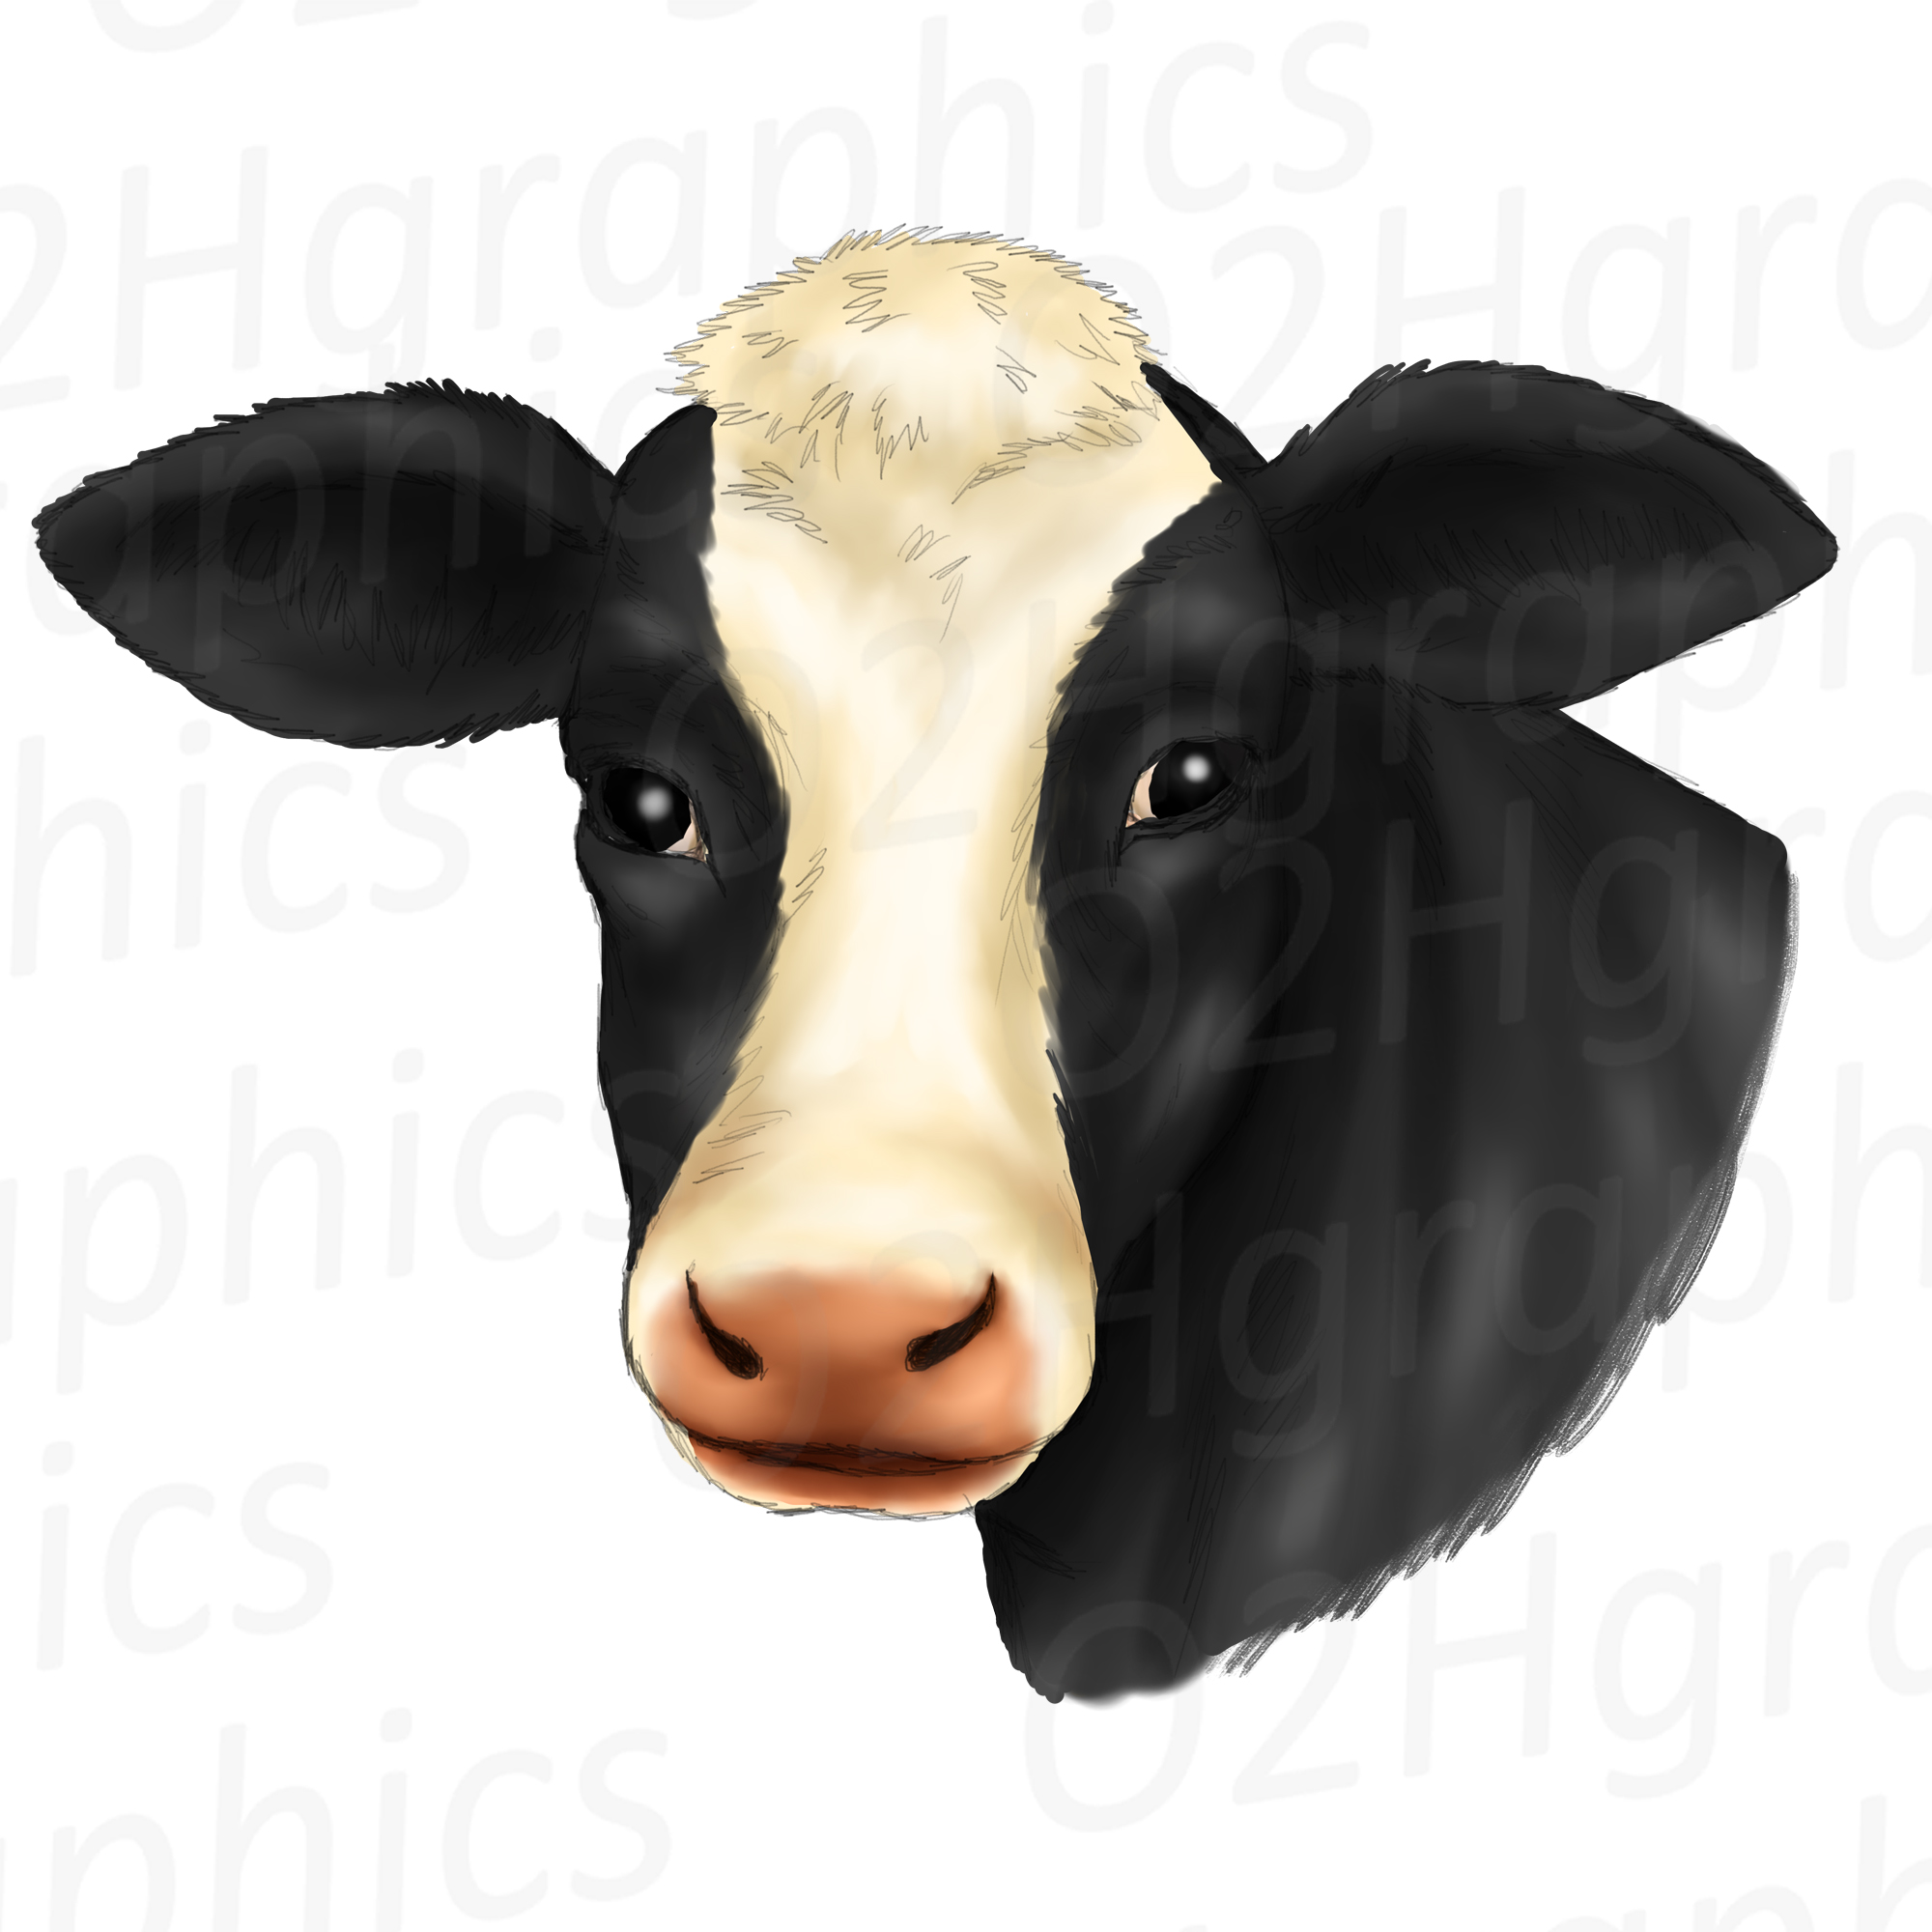 cows clipart face